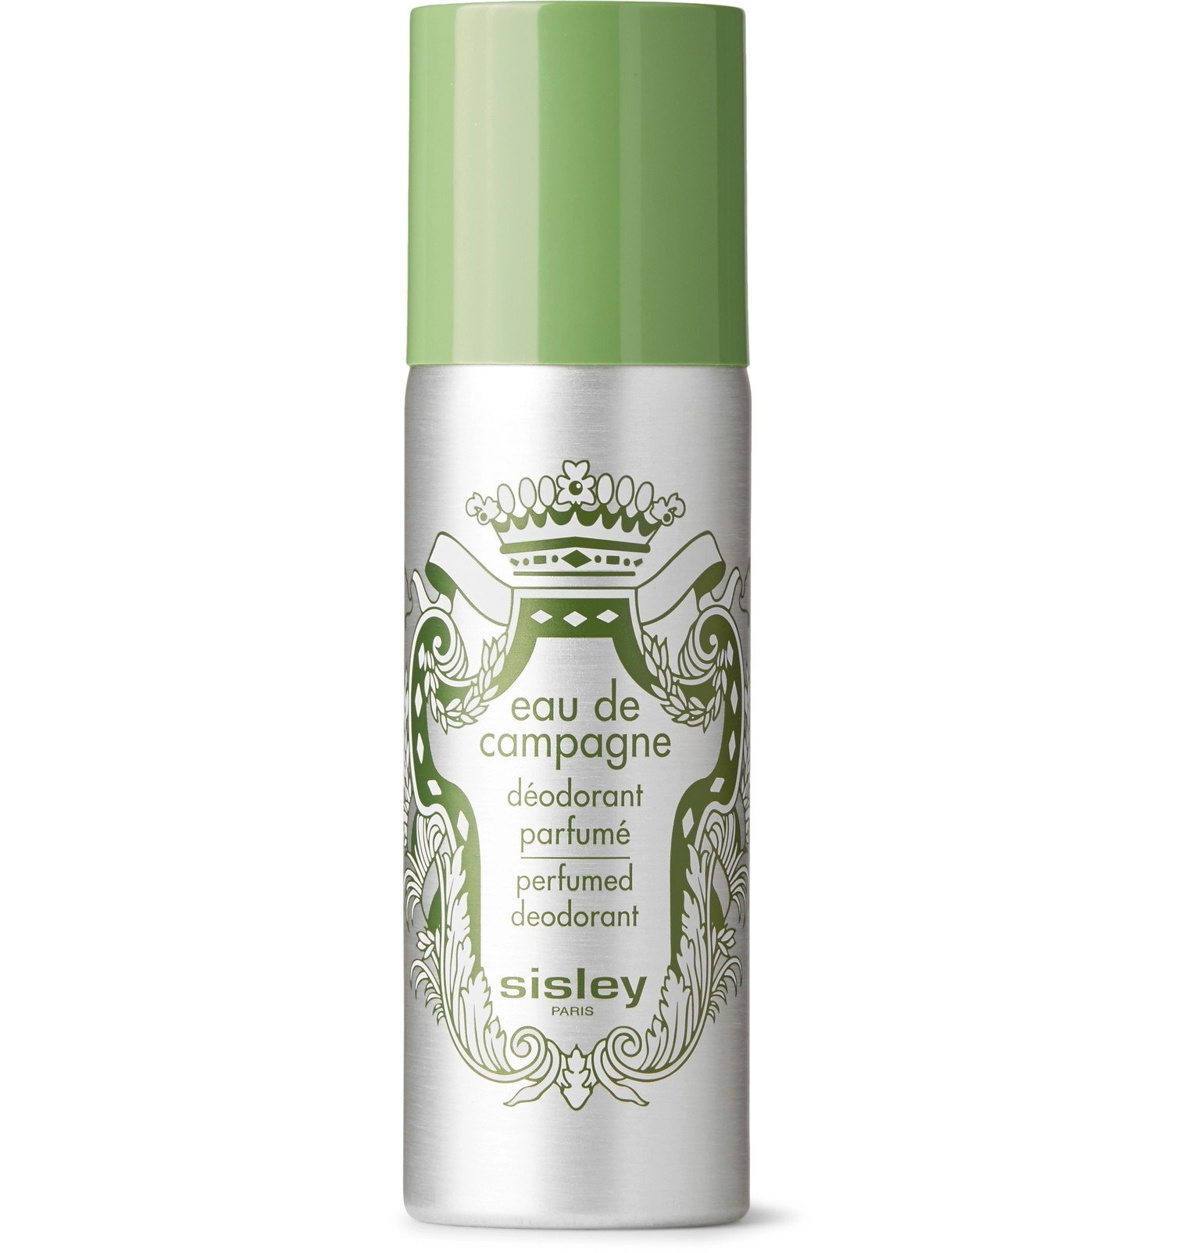 Sisley - Eau de Campagne Deodorant, 150ml - Colorless Sisley